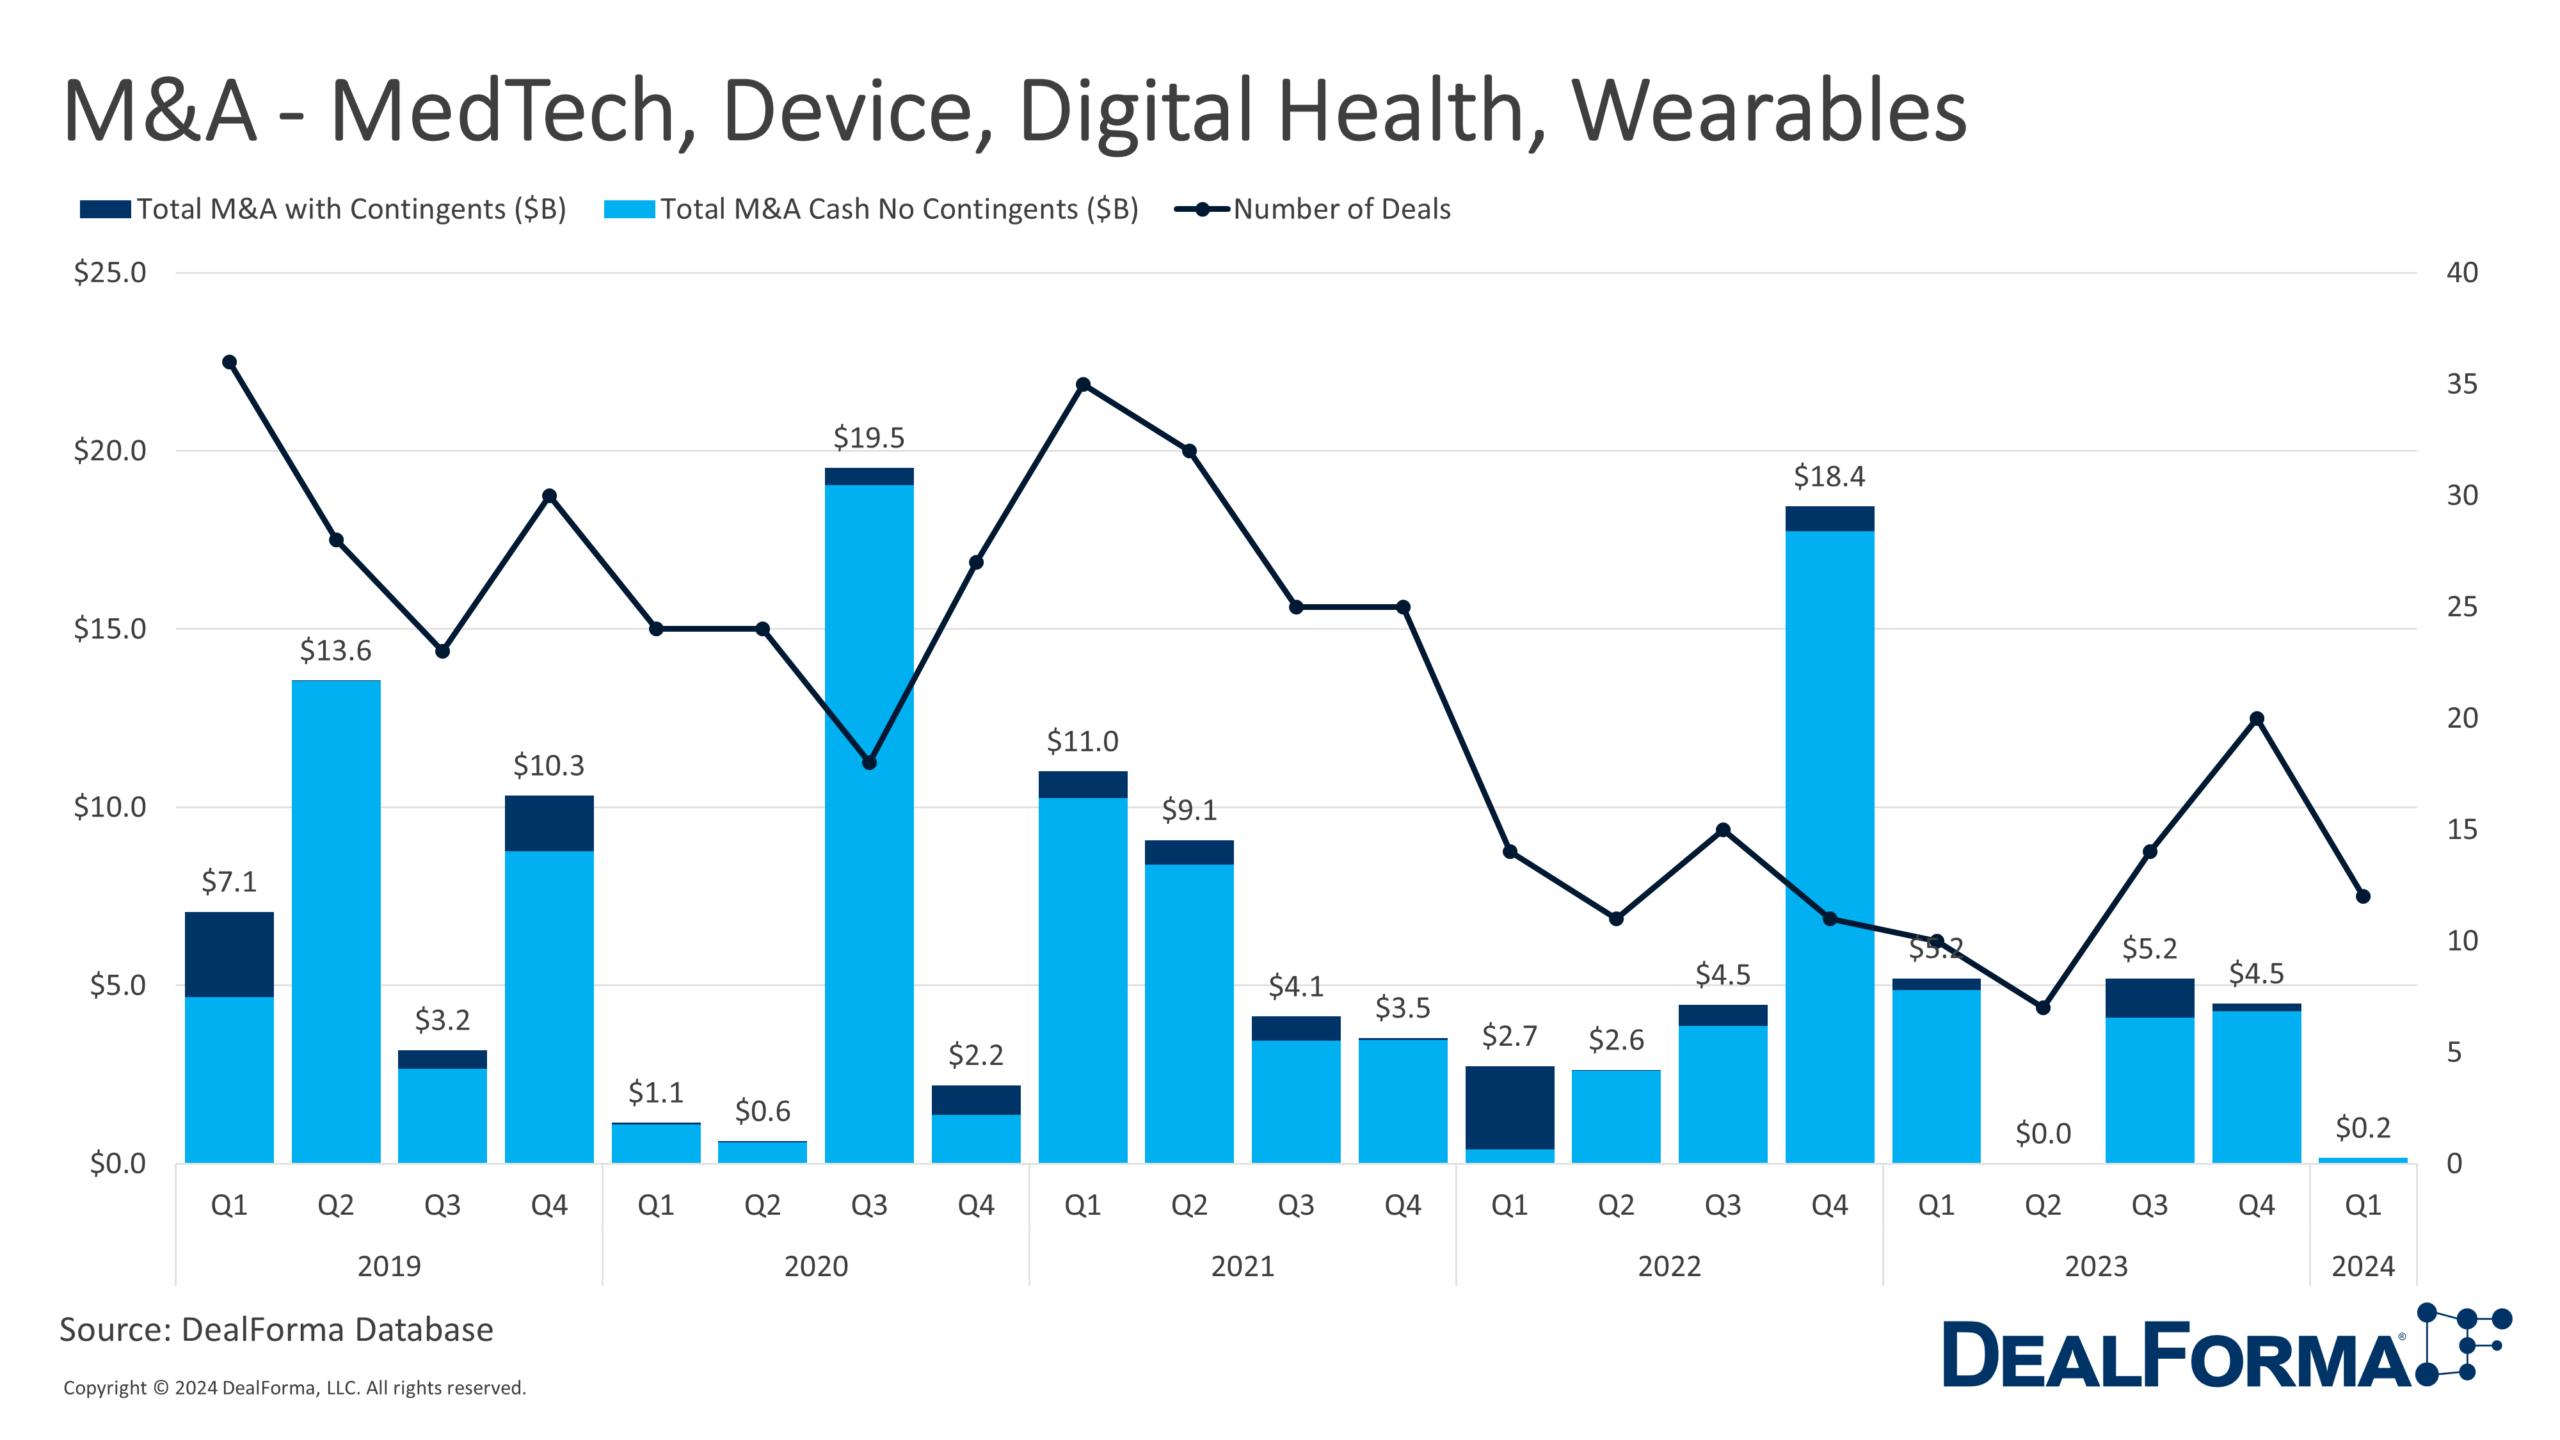 M&A - MedTech, Device, Digital Health, Wearables